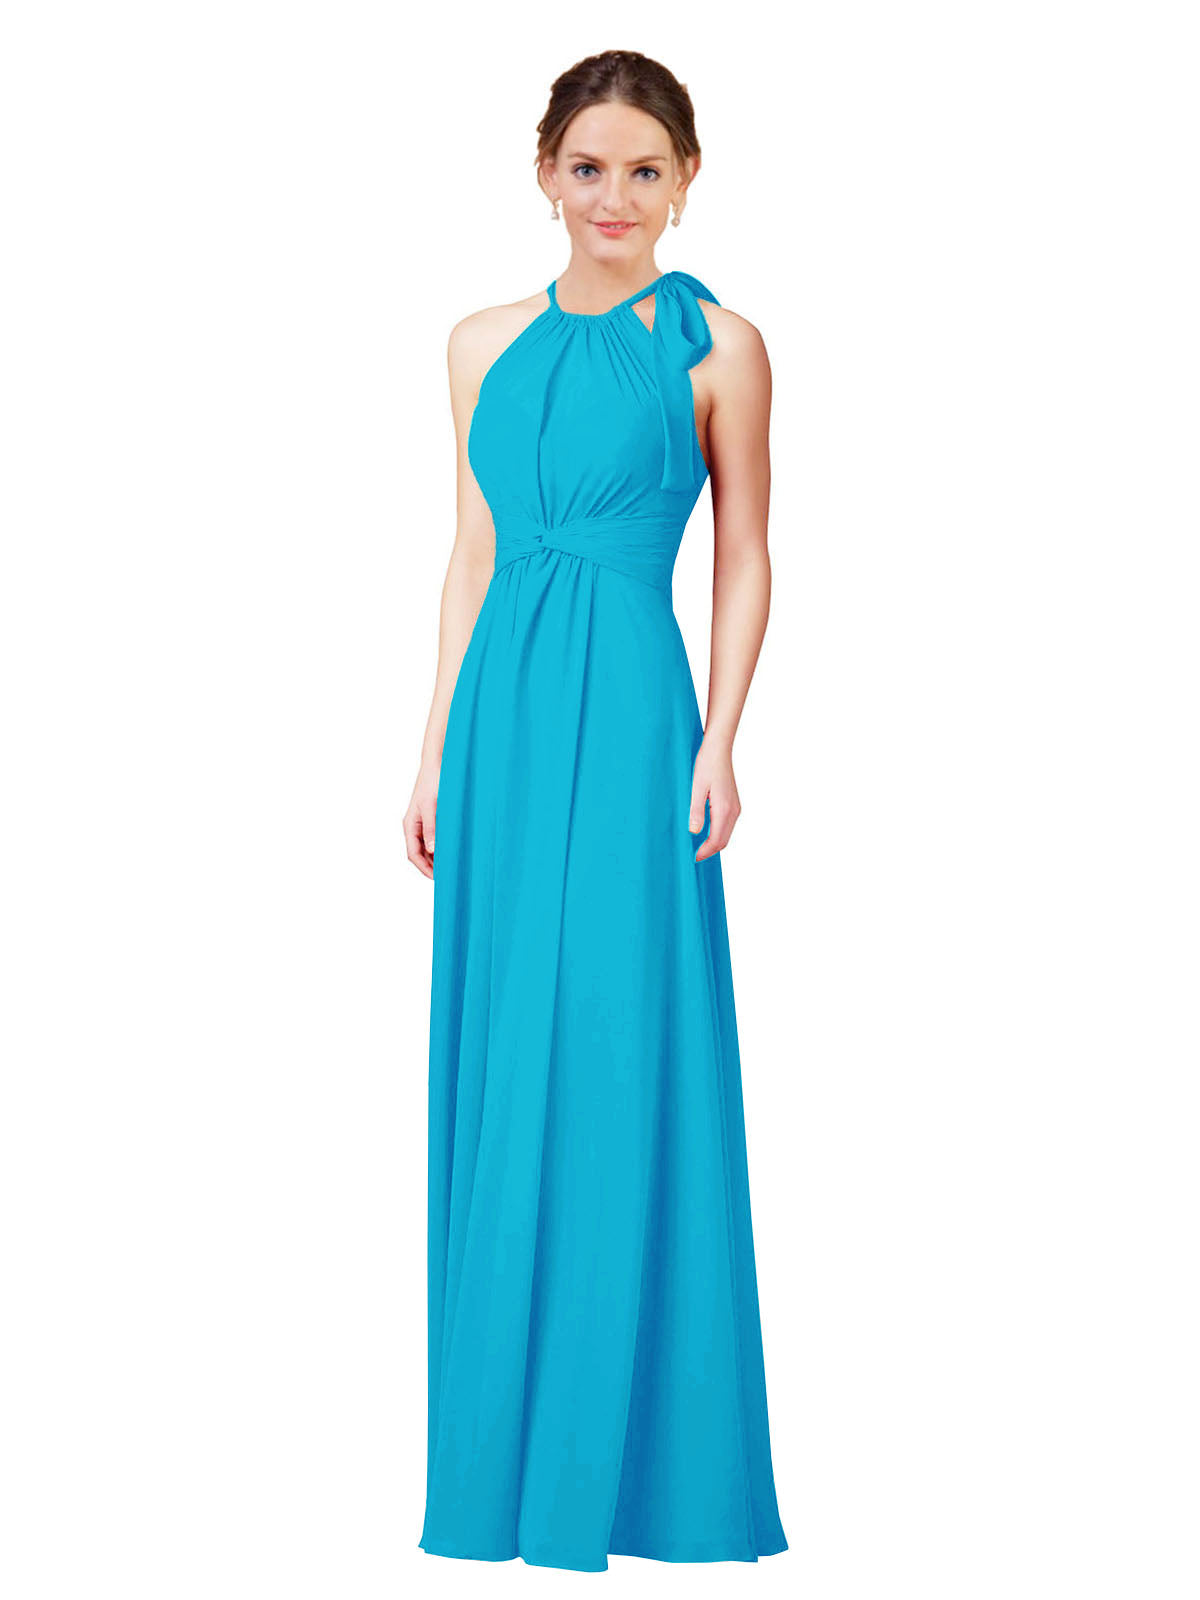 Turquoise Halter Sleeveless Long Bridesmaid Dress Alejandra